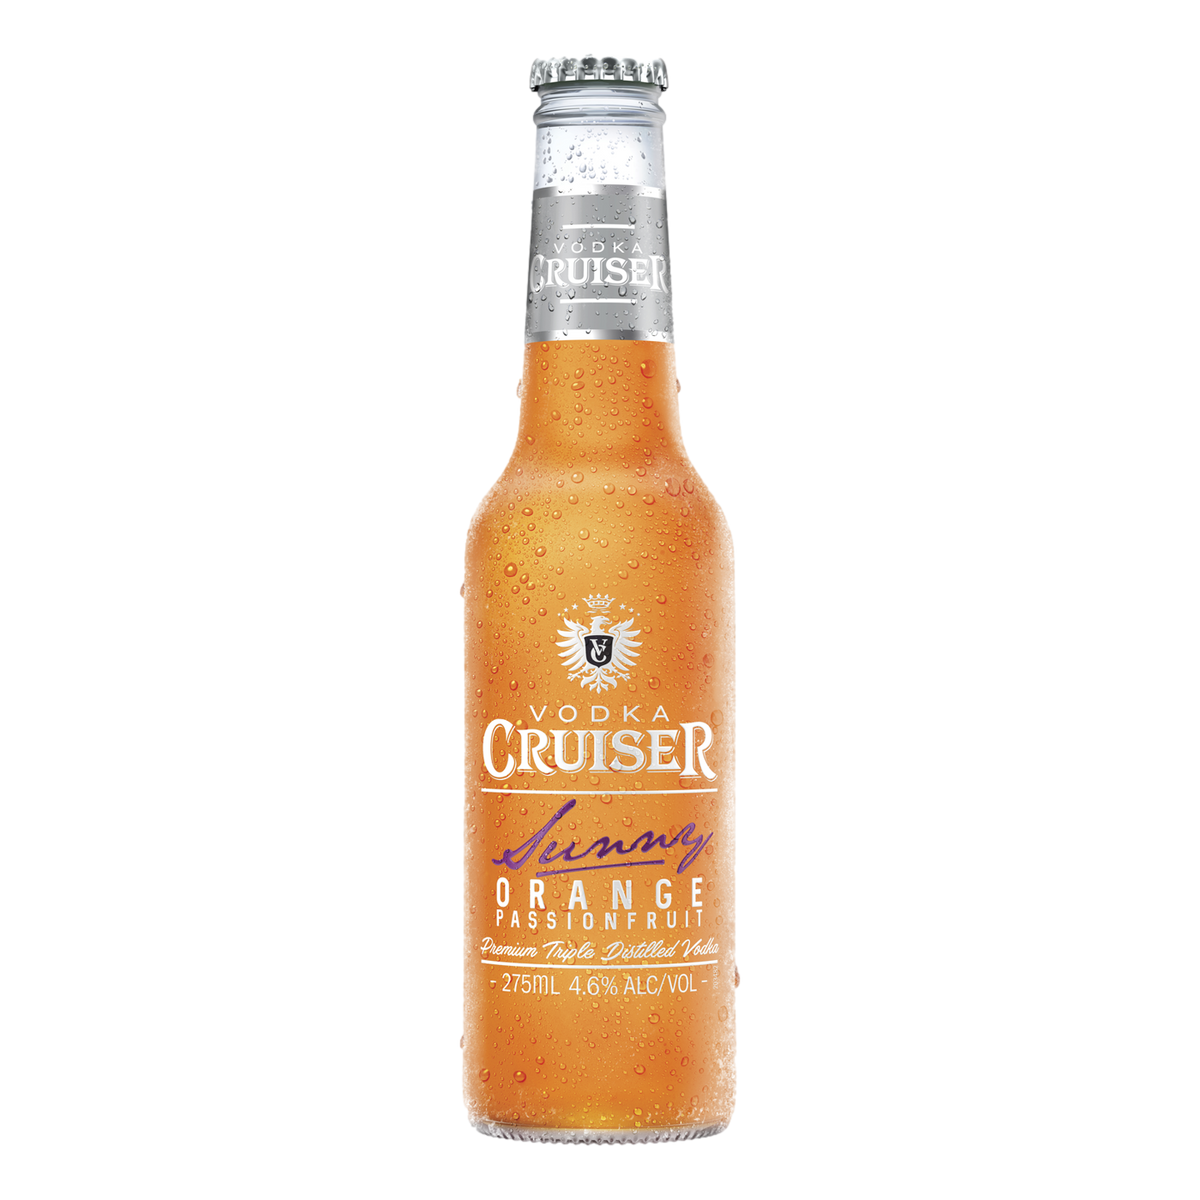 Vodka Cruiser Sunny Orange & Passionfruit 275ml Bottle Case of 24